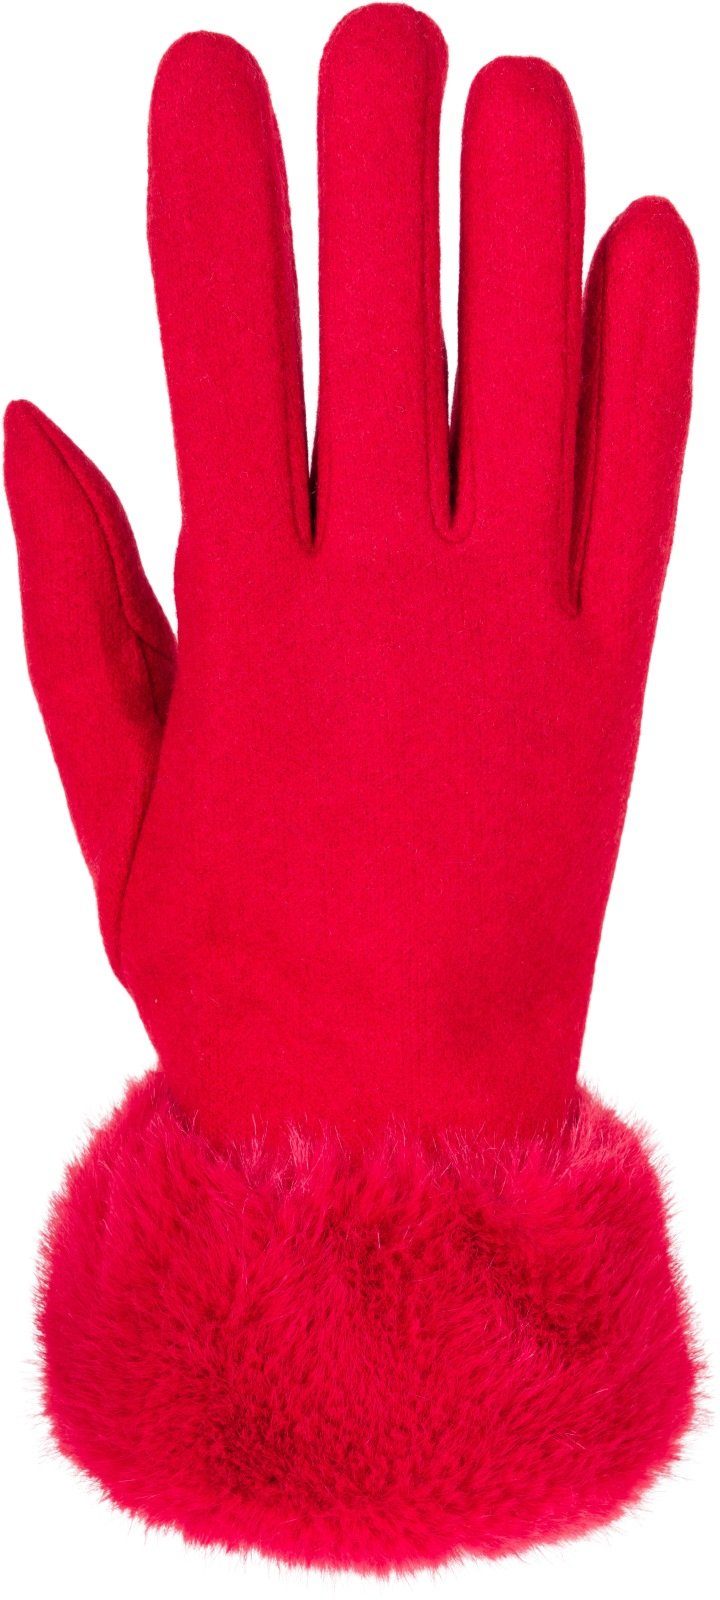 Unifarbene Handschuhe Touchscreen Fleecehandschuhe Kunstfell mit styleBREAKER Rot